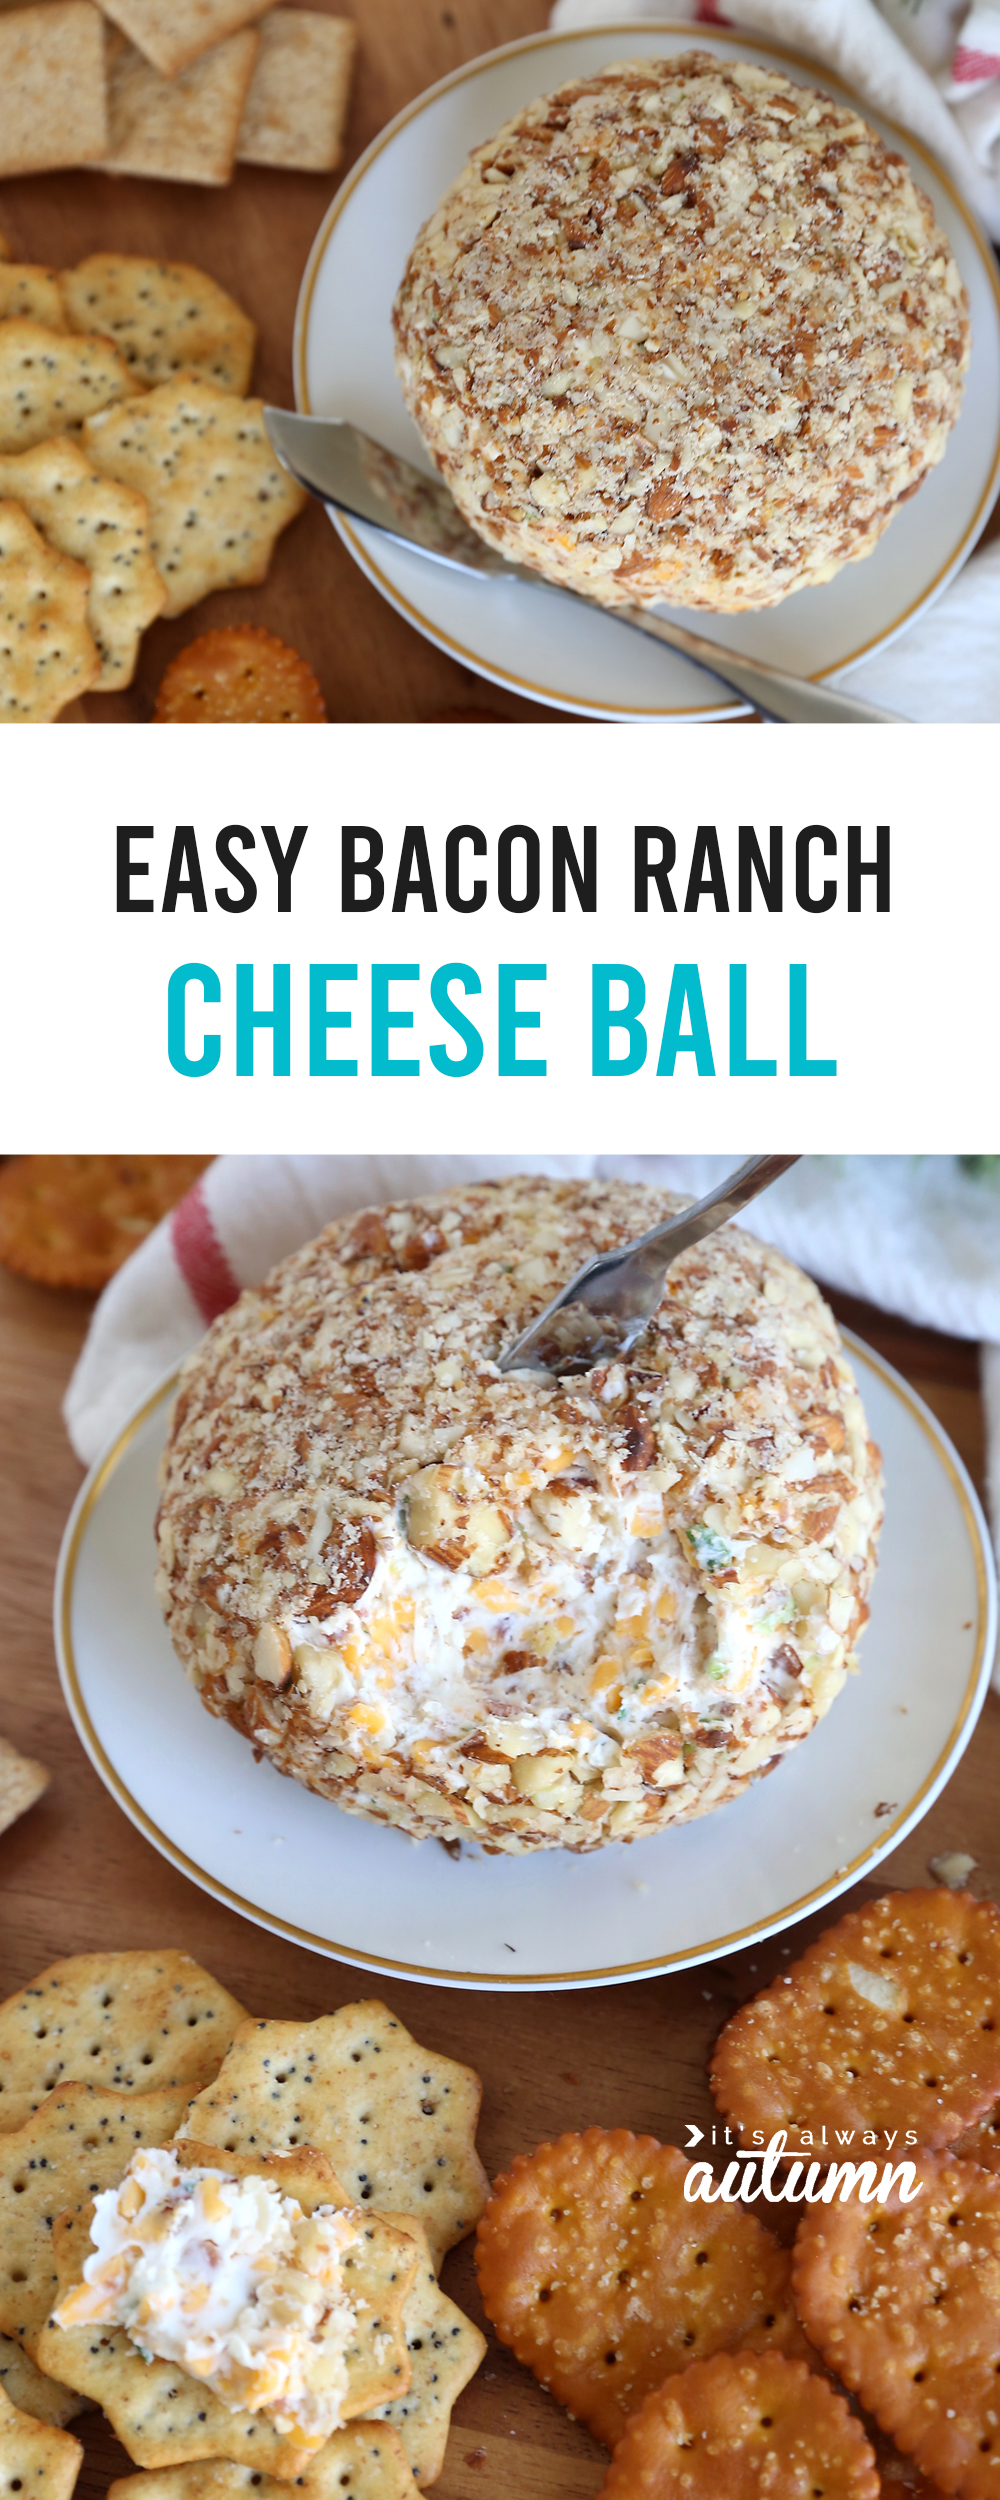 Easy cheese ball recipe